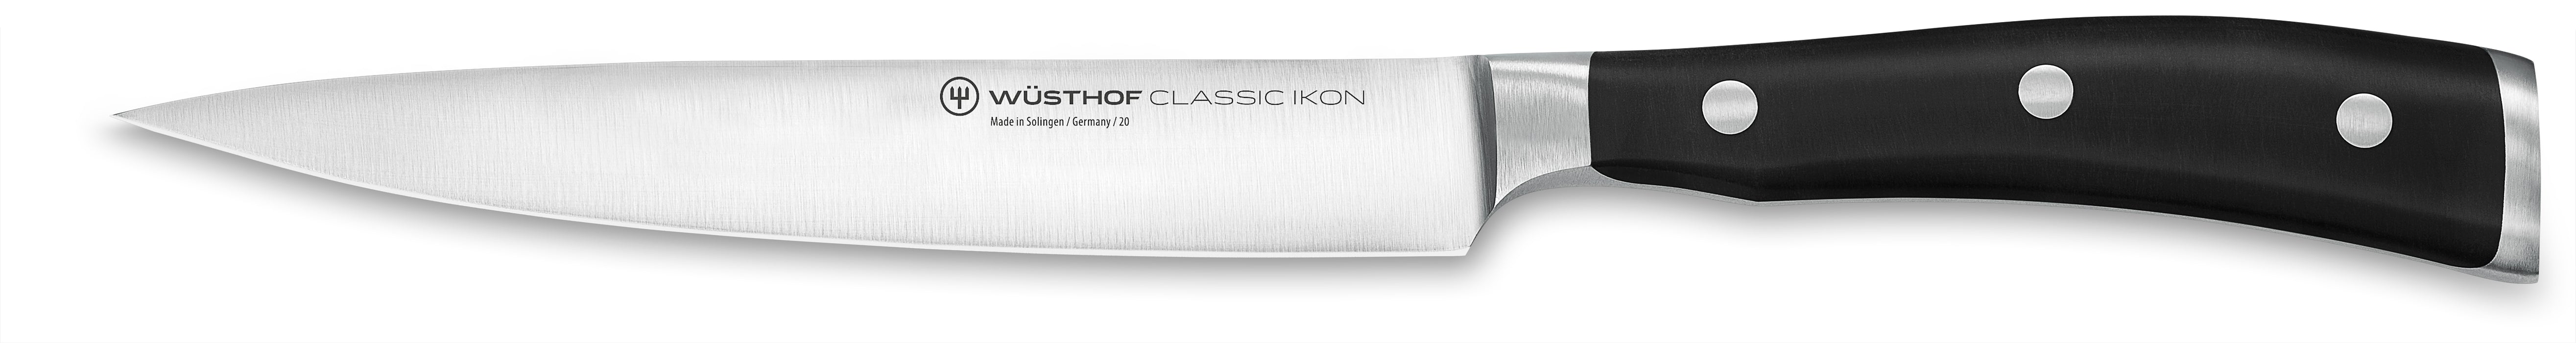 Wusthof Classic Ikon 6 Inch Flexible Fillet Knife